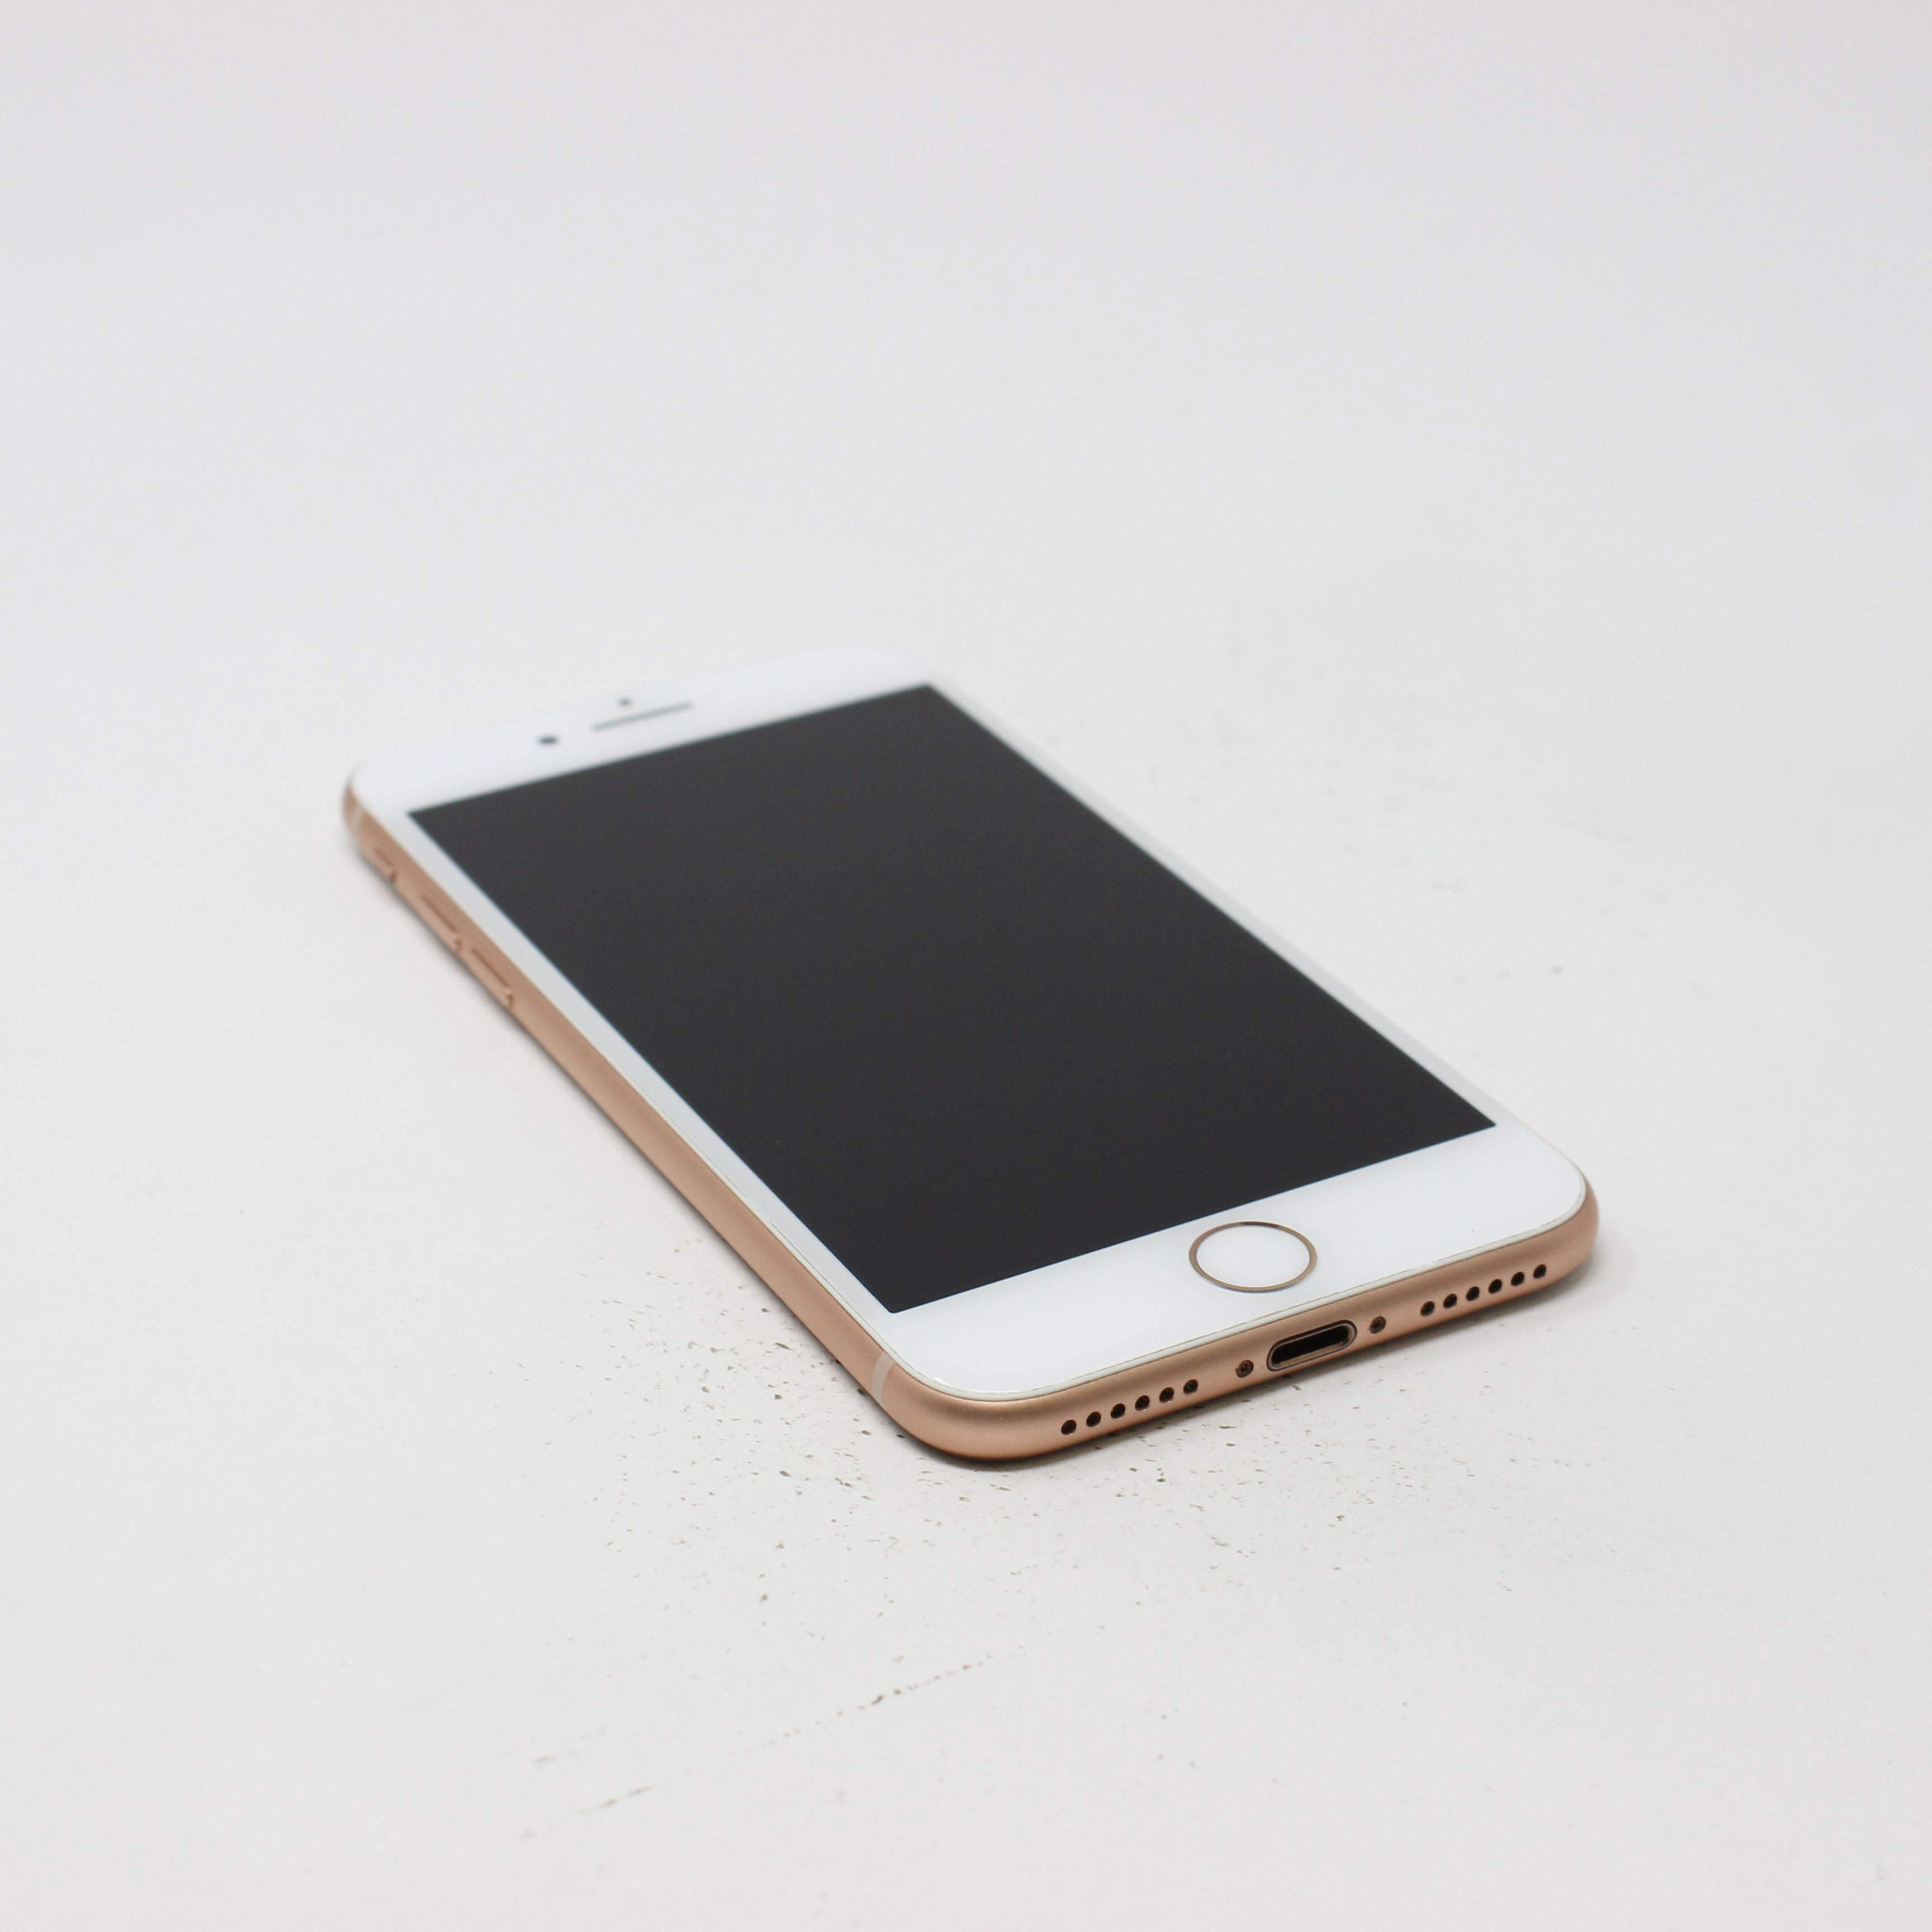 iPhone 8 64GB Gold - Unlocked For Sale | UpTradeit.com